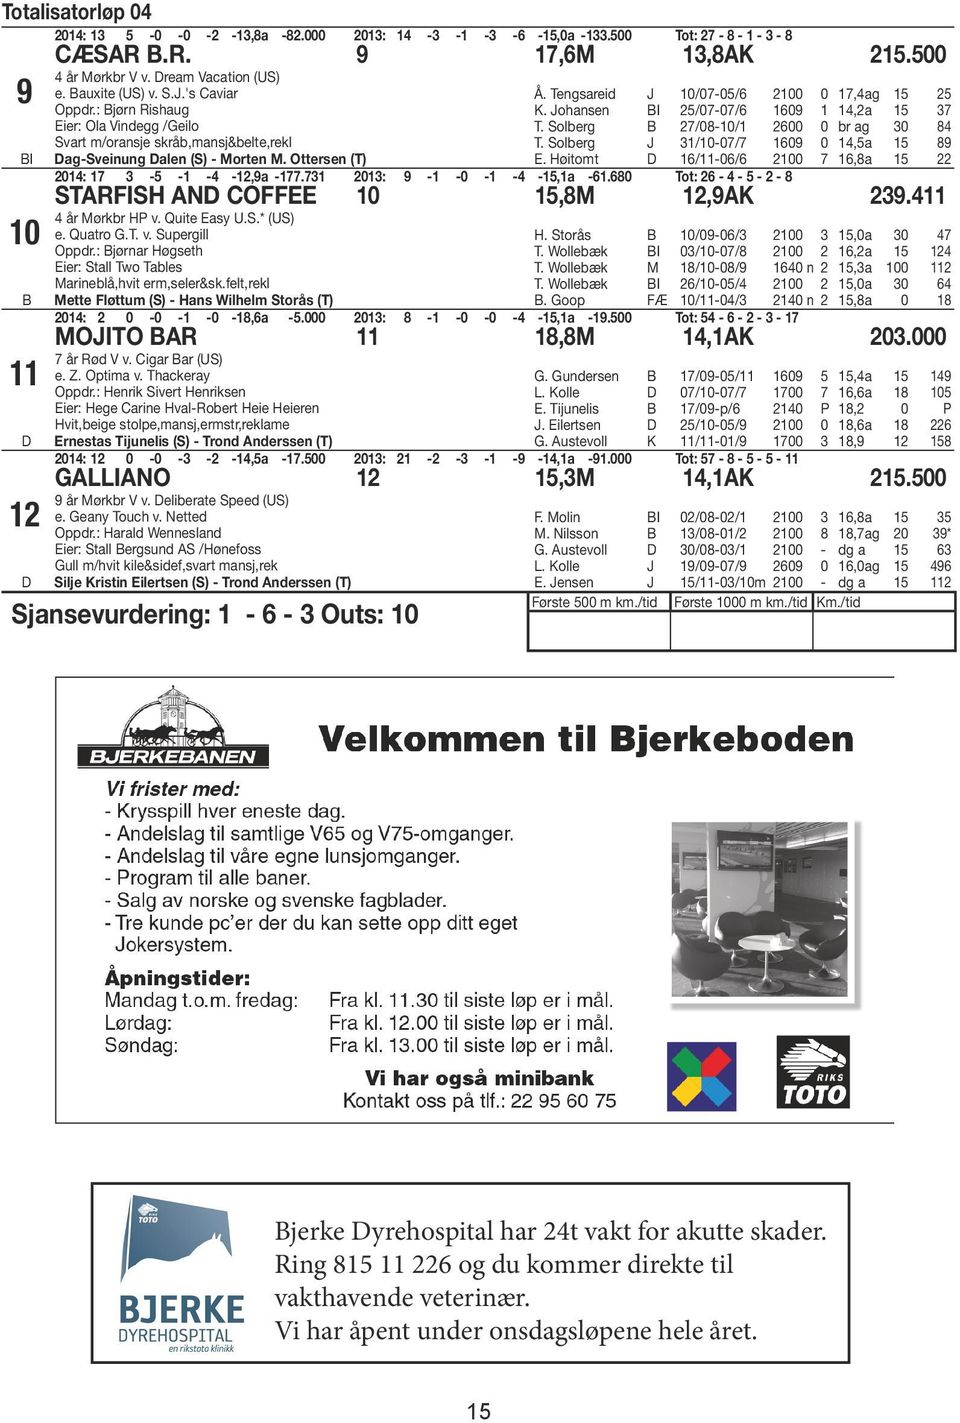 Solberg 7/08-0/ 00 0 br ag 0 8 T. Solberg /0-07/7 09 0,a 89 E. Høitomt D /-0/ 00 7,8a 0: 7 - - - -,9a -77.7 0: 9 - -0 - - -,a -.80 Tot: - - - - 8 STARFISH AND COFFEE 0,8M,9AK 9. år Mørkbr HP v.